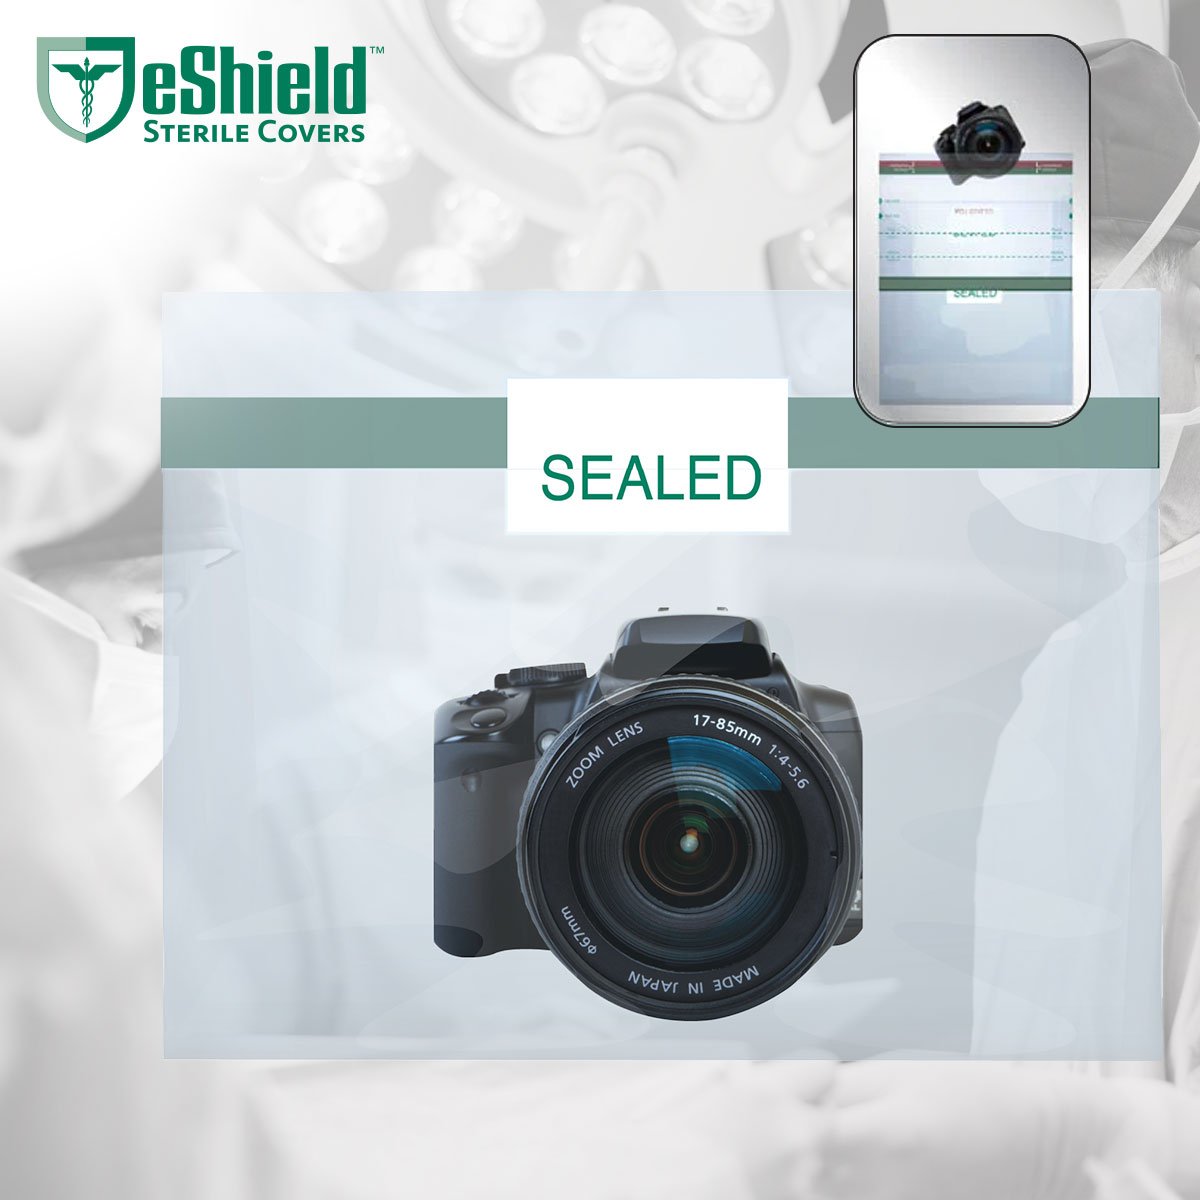 05A-eShield-Sterile-Electronic-Cover-SLR-Camera-Web-1